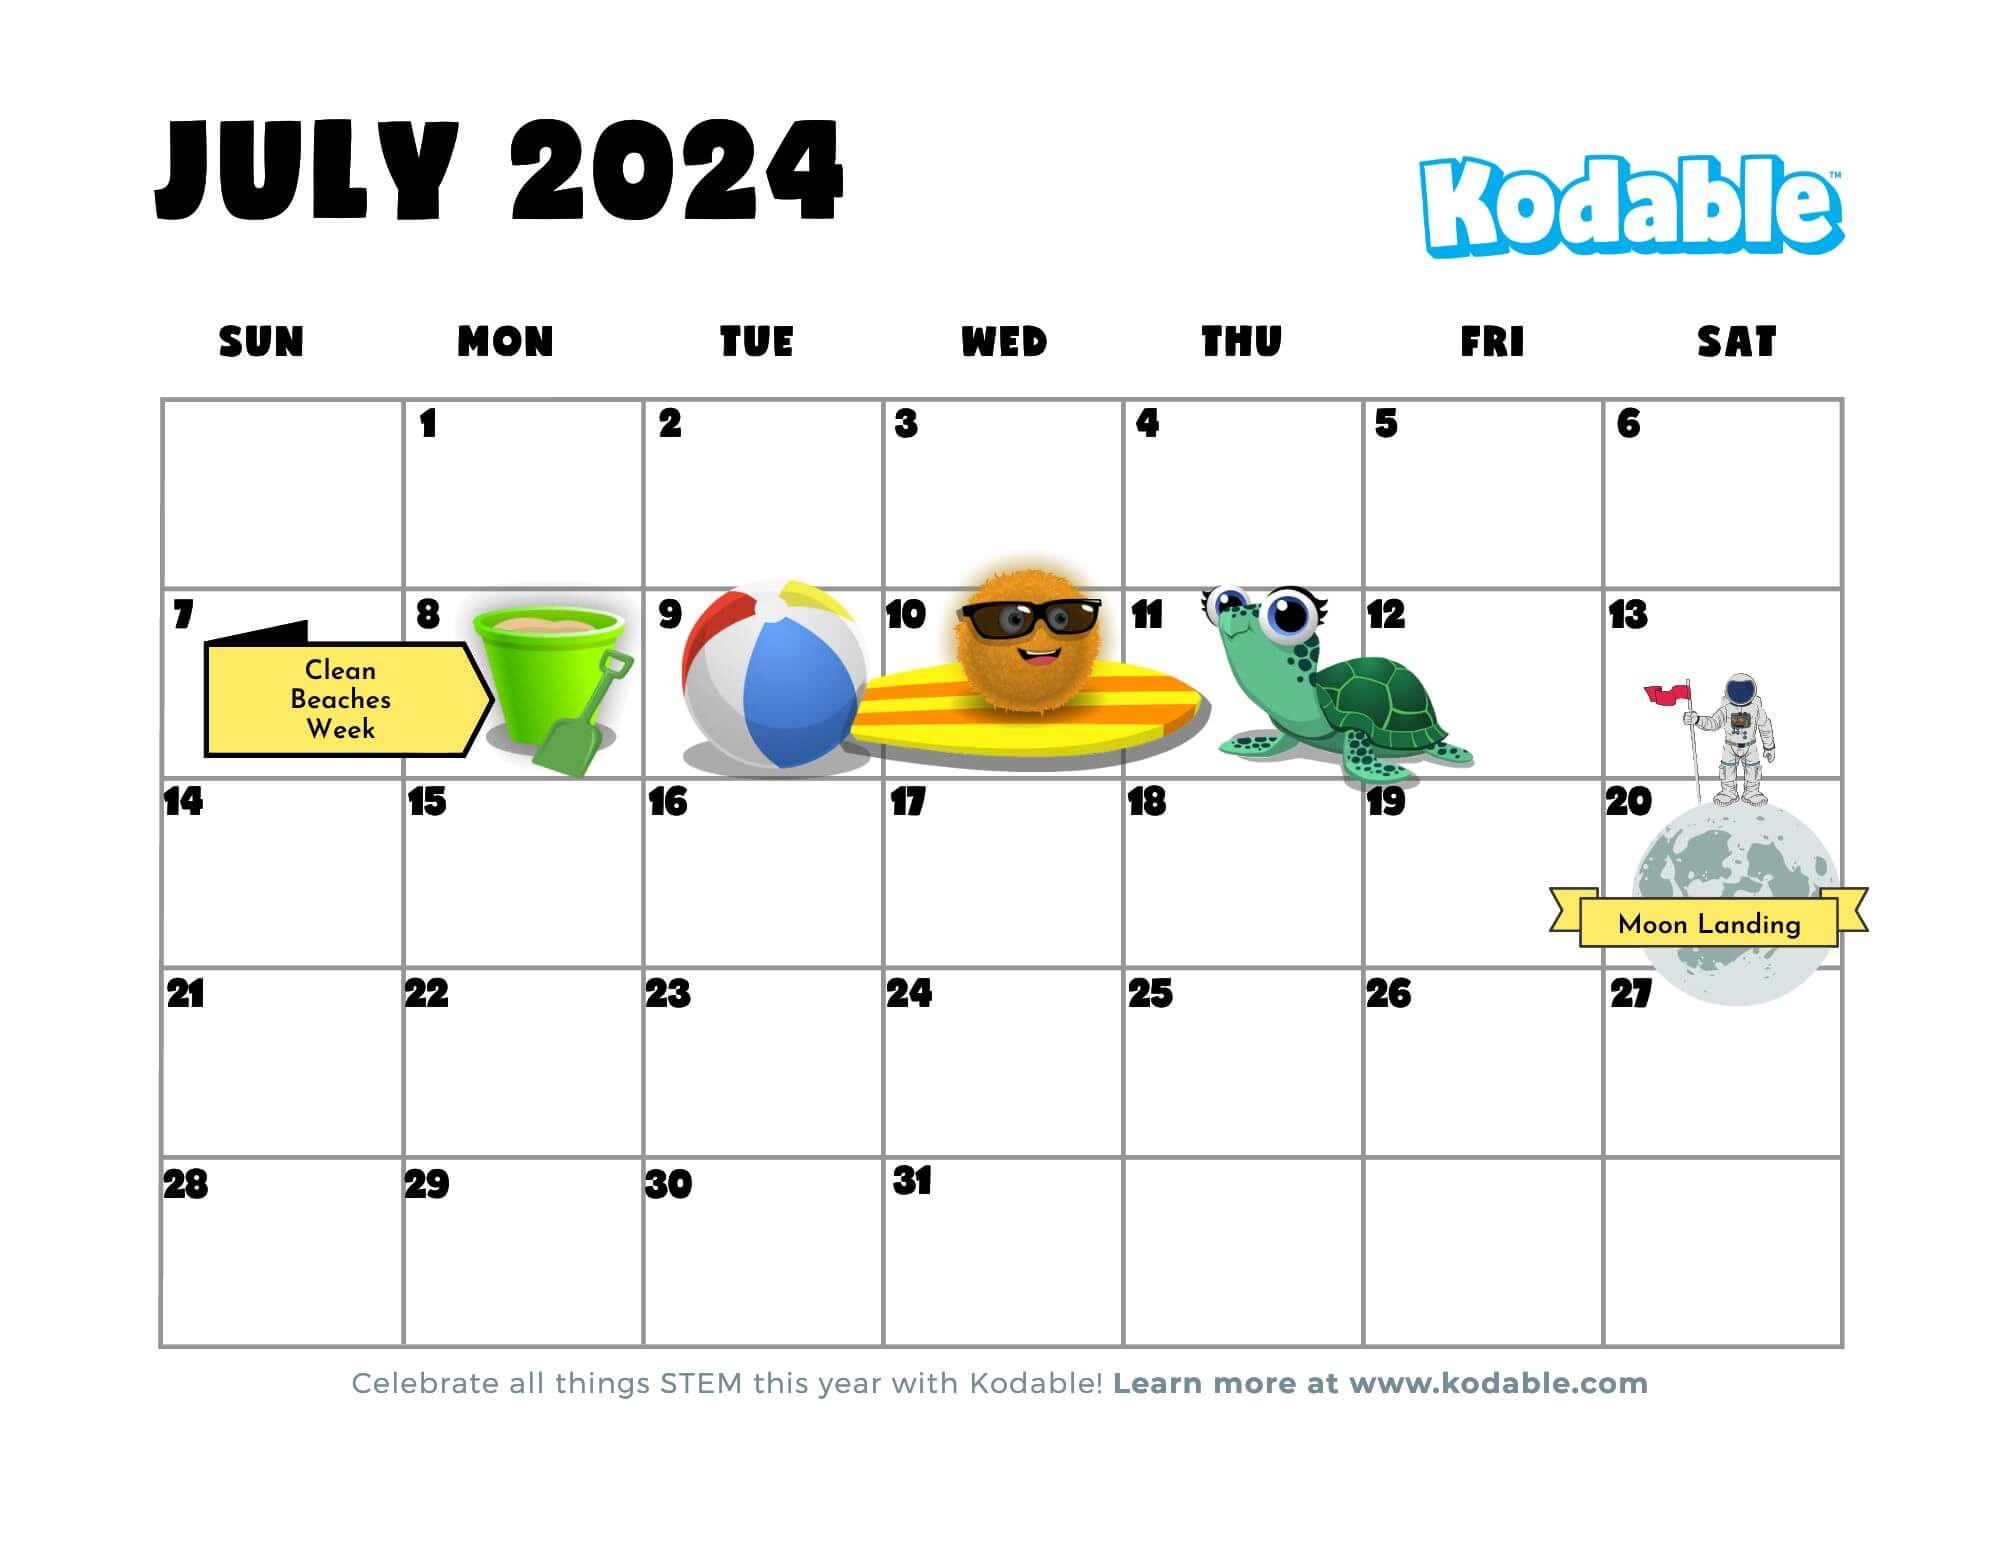 2023-2024 Stem Events Calendar And Holidays For Teachers | Kodable for July Events Calendar 2024